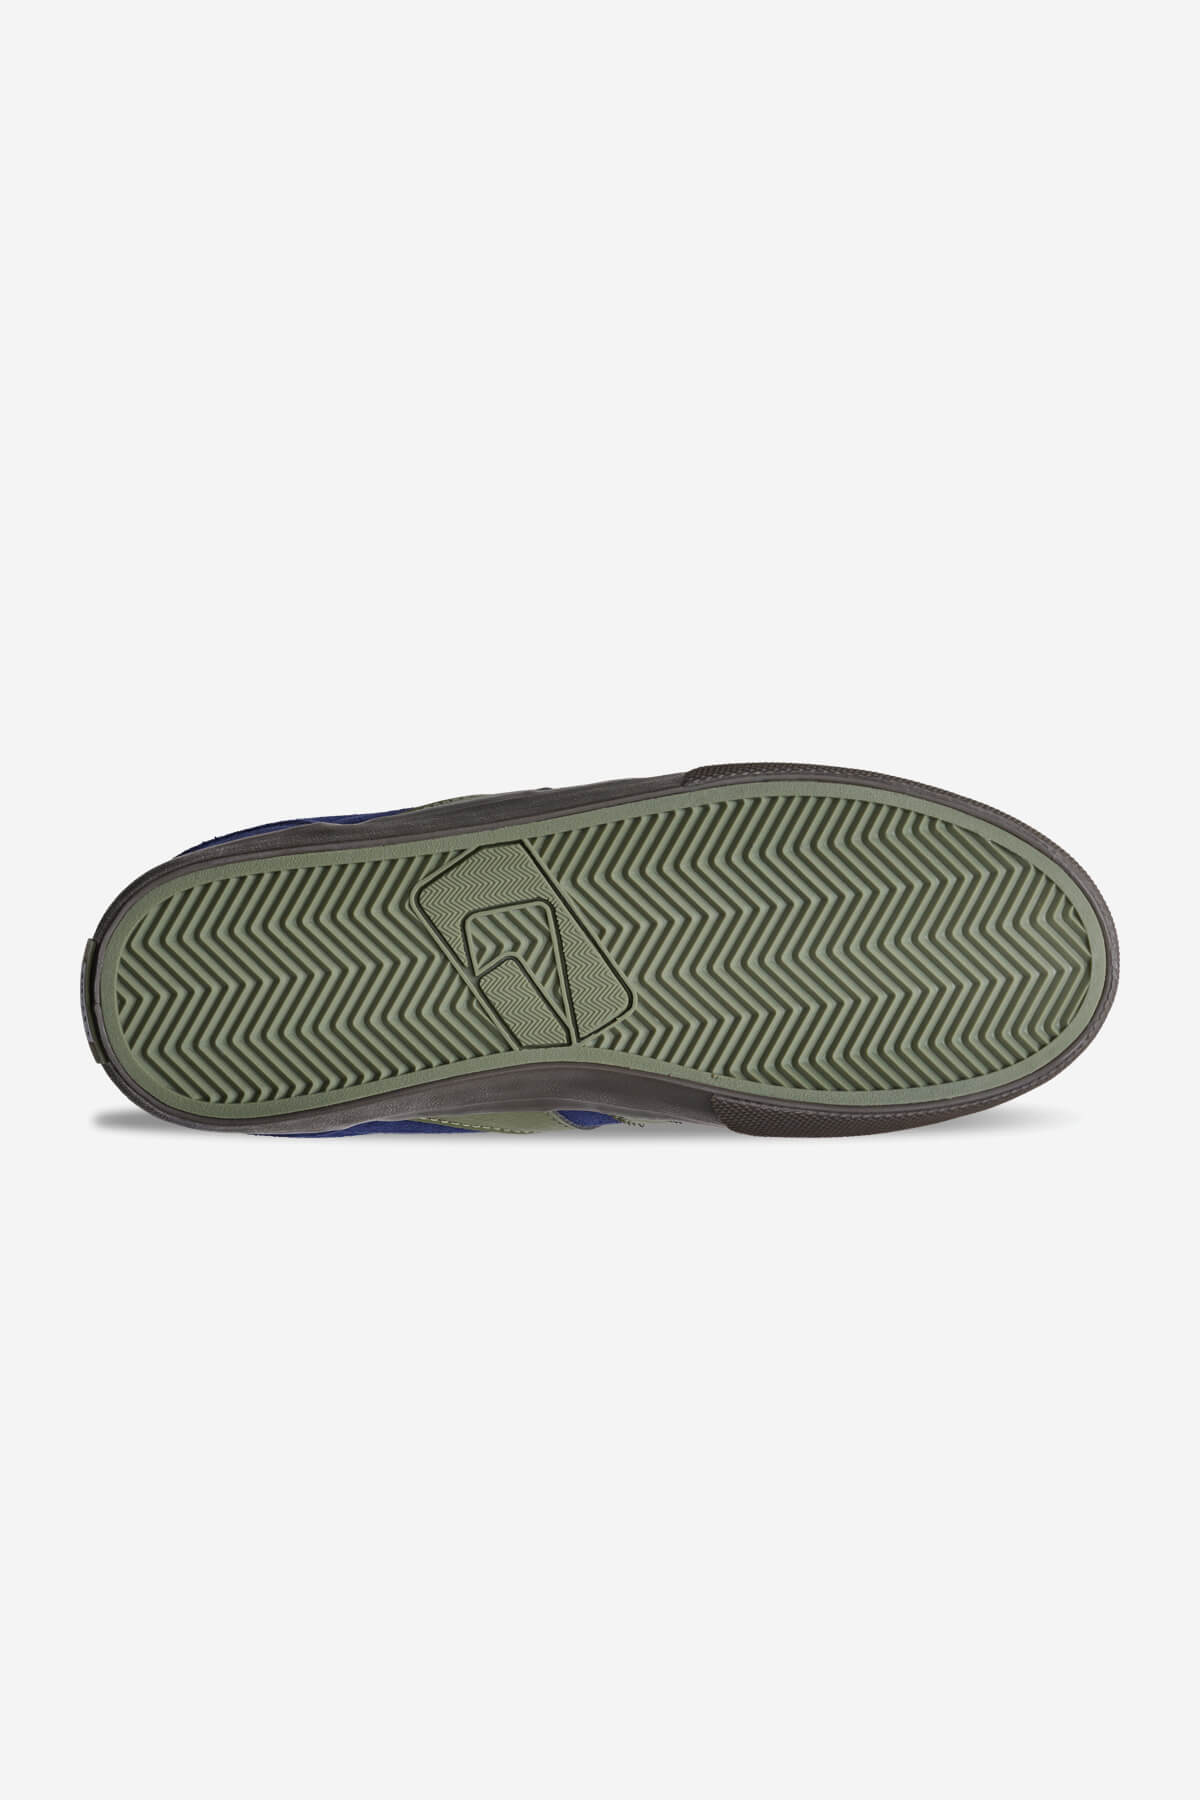 encore-2 navy green gum skate shoes